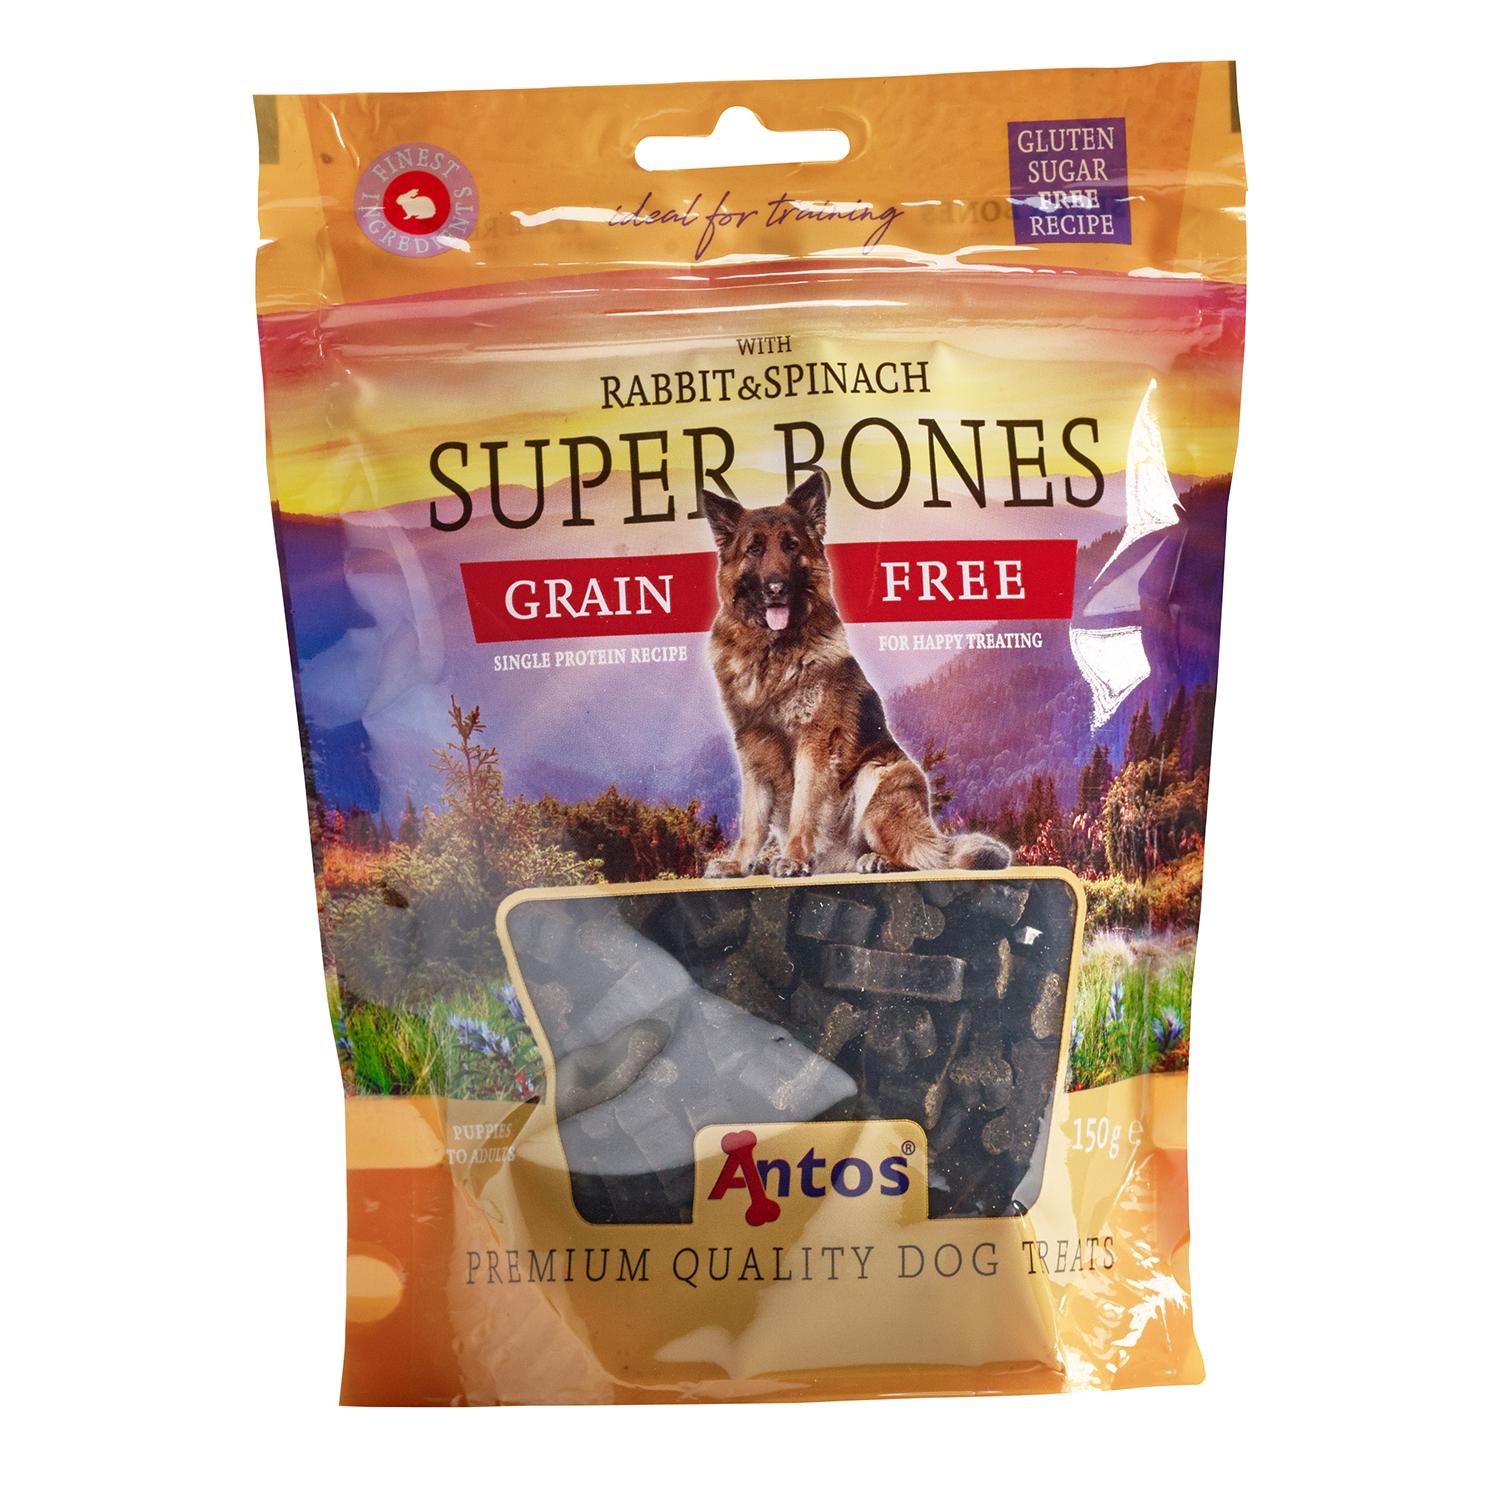 Antos Rabbit and Spinach super bones